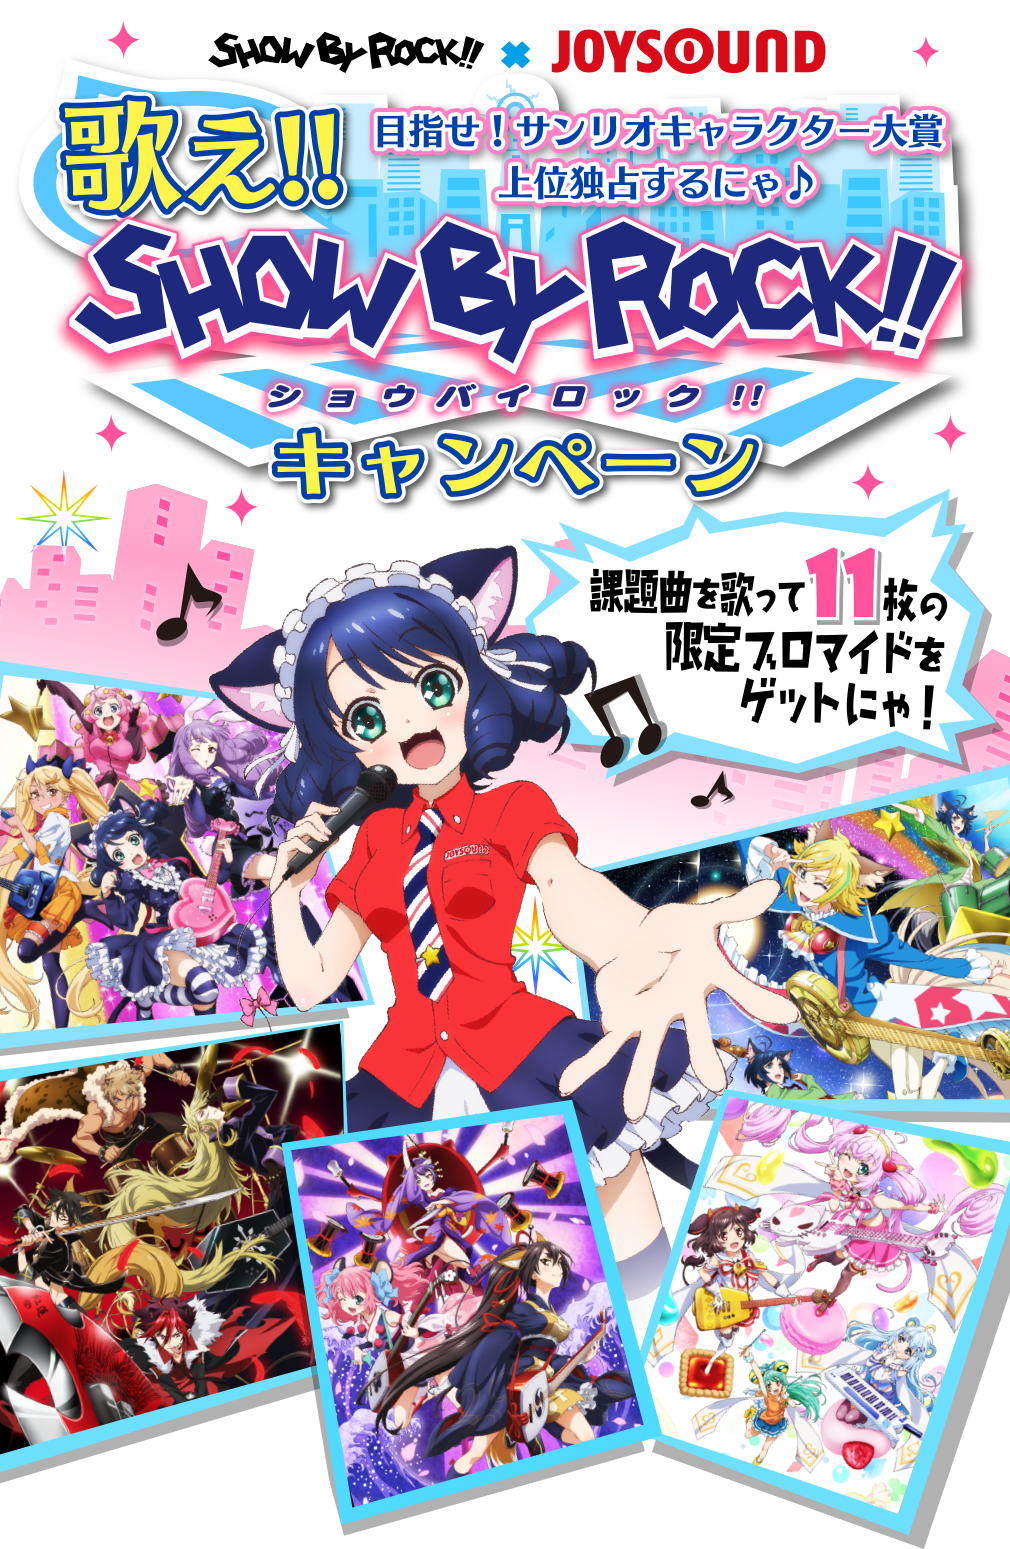 SHOW BY ROCK!!×JOYSOUND 歌え!!SHOW BY ROCK!!キャンペーン